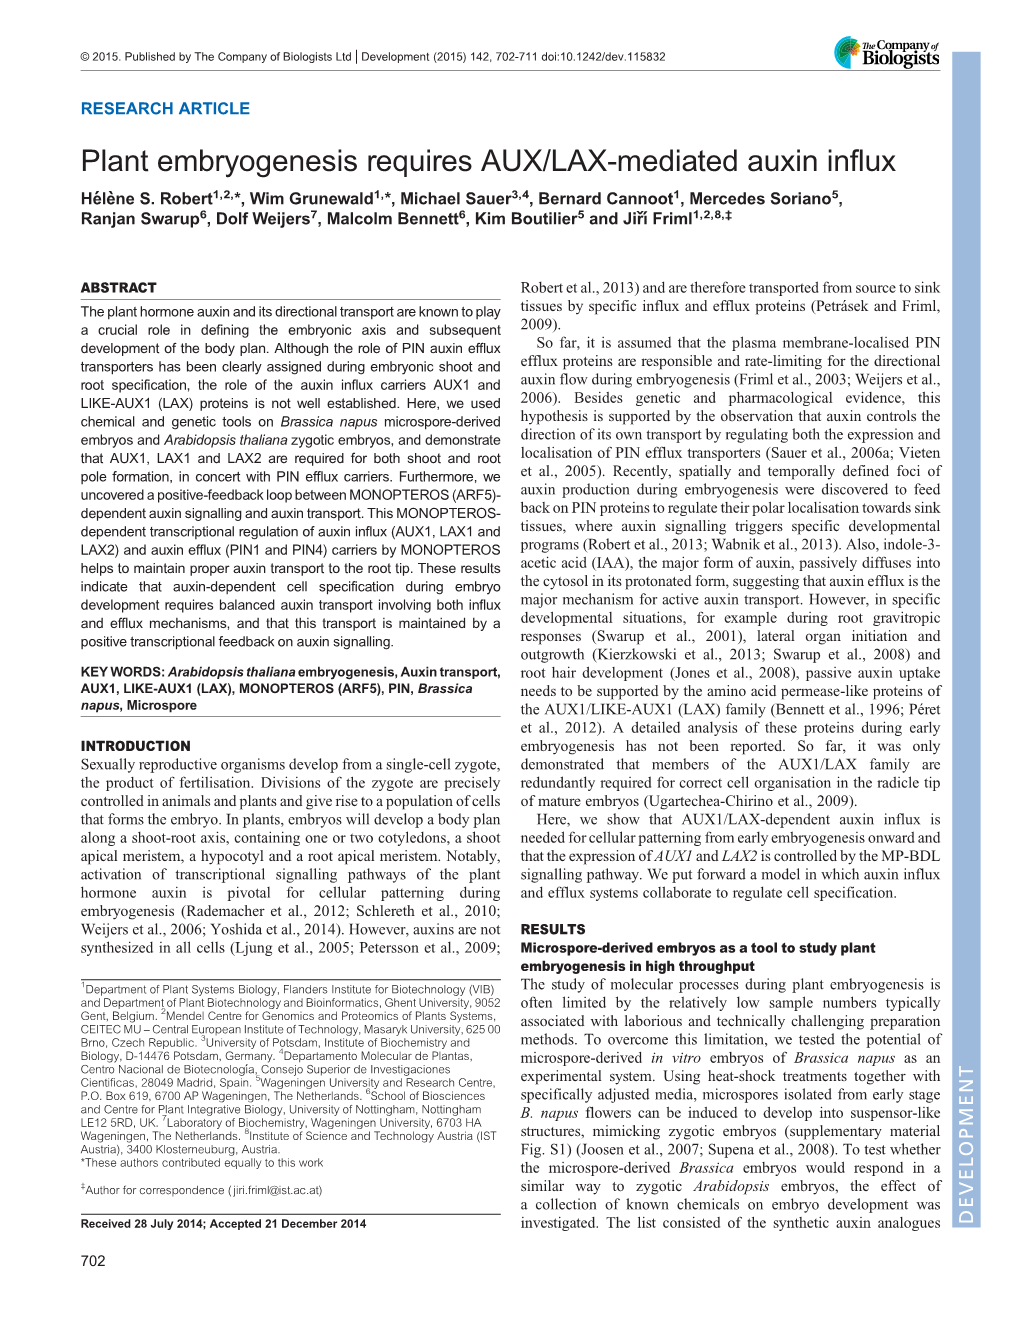 Plant Embryogenesis Requires AUX/LAX-Mediated Auxin Influx Hélenè S